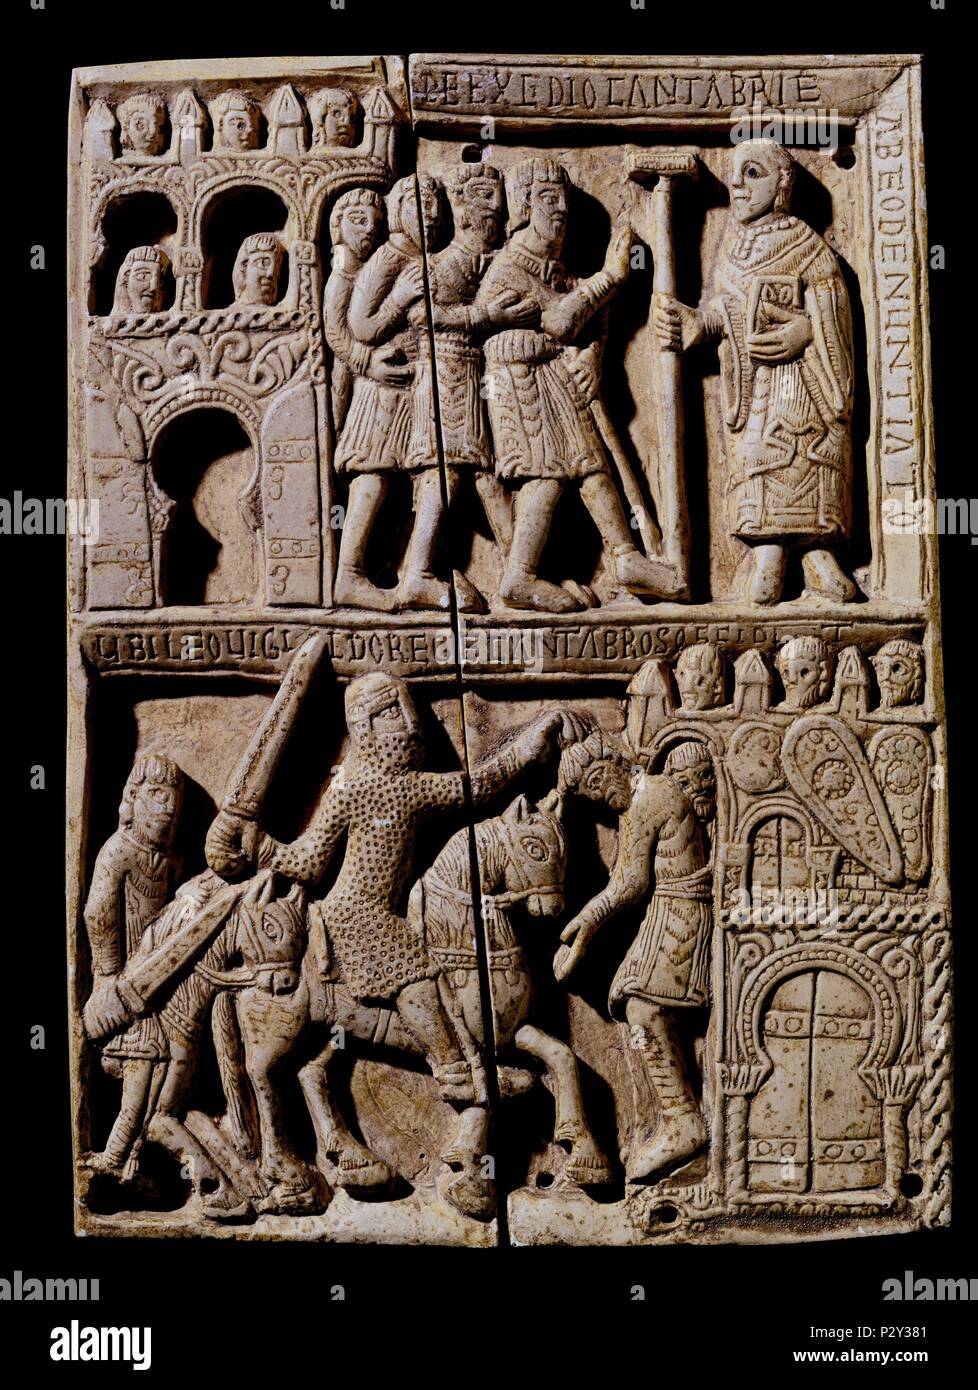 Ivory box from San Millan de la Cogolla. Capture of the Cantabria by Leovigildo. 11th century. Romanesque art. Madrid, National Museum of Archeology. Location: MUSEO ARQUEOLOGICO NACIONAL-COLECCION, MADRID, SPAIN. Stock Photo